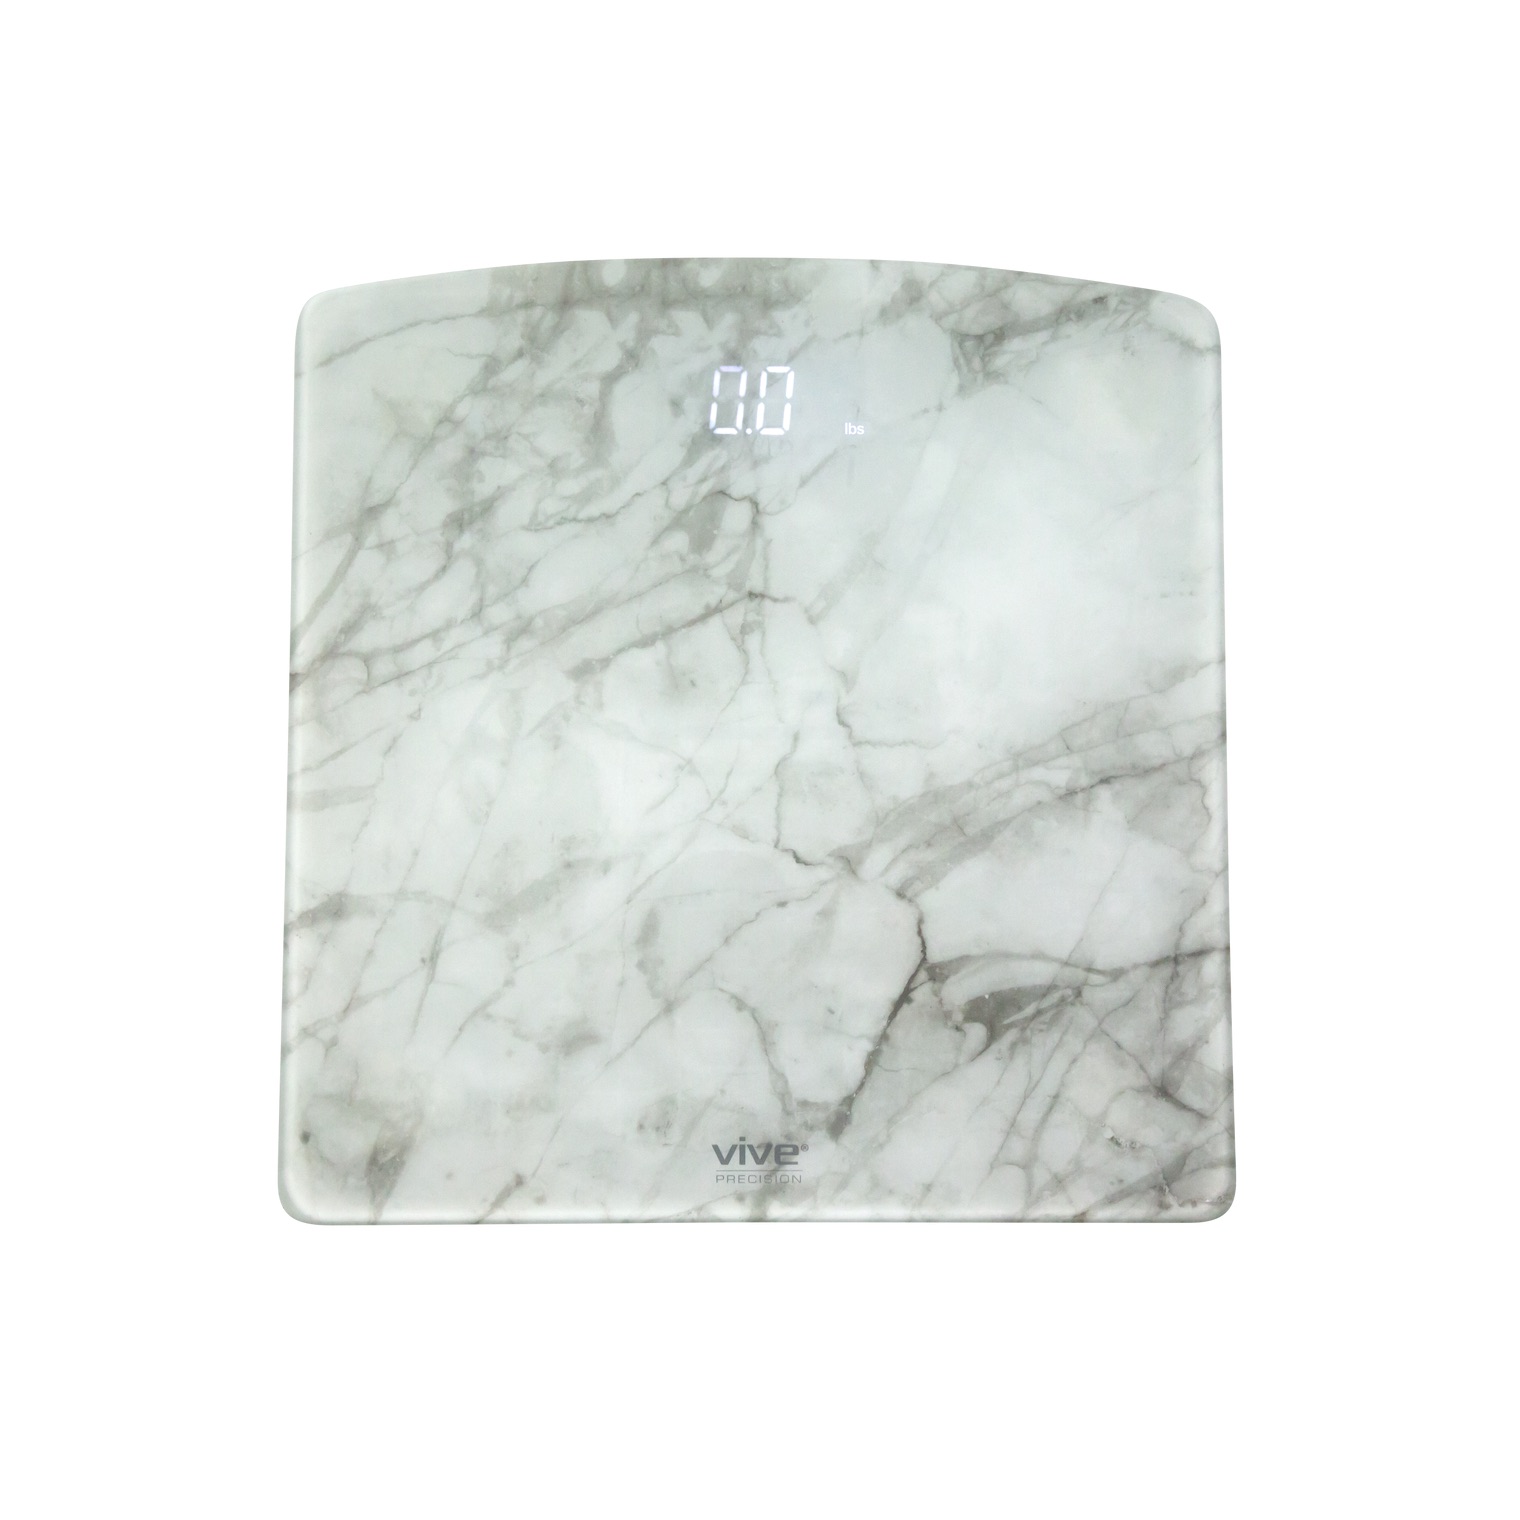 marble digital scale